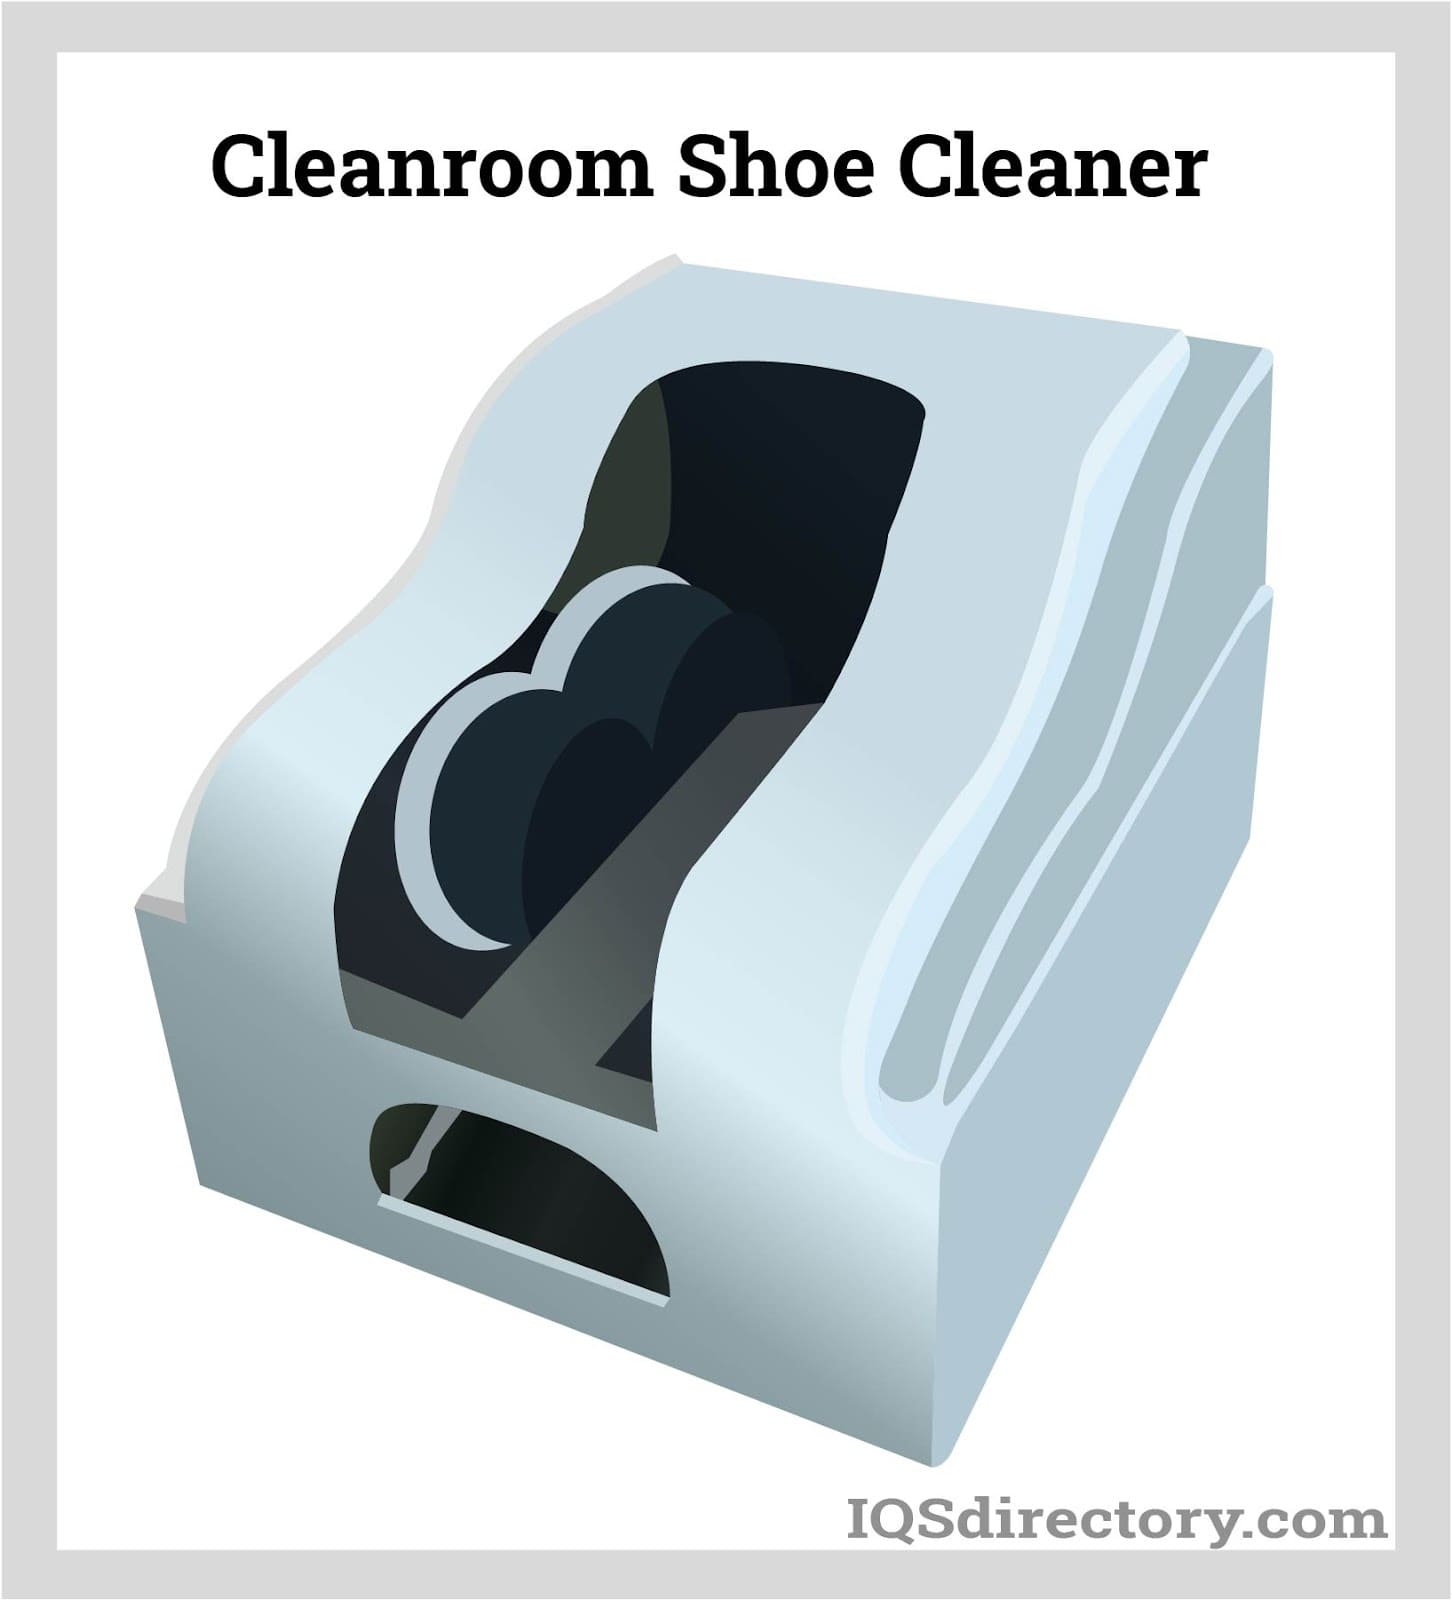 Cleanroom Shoe Cleaner